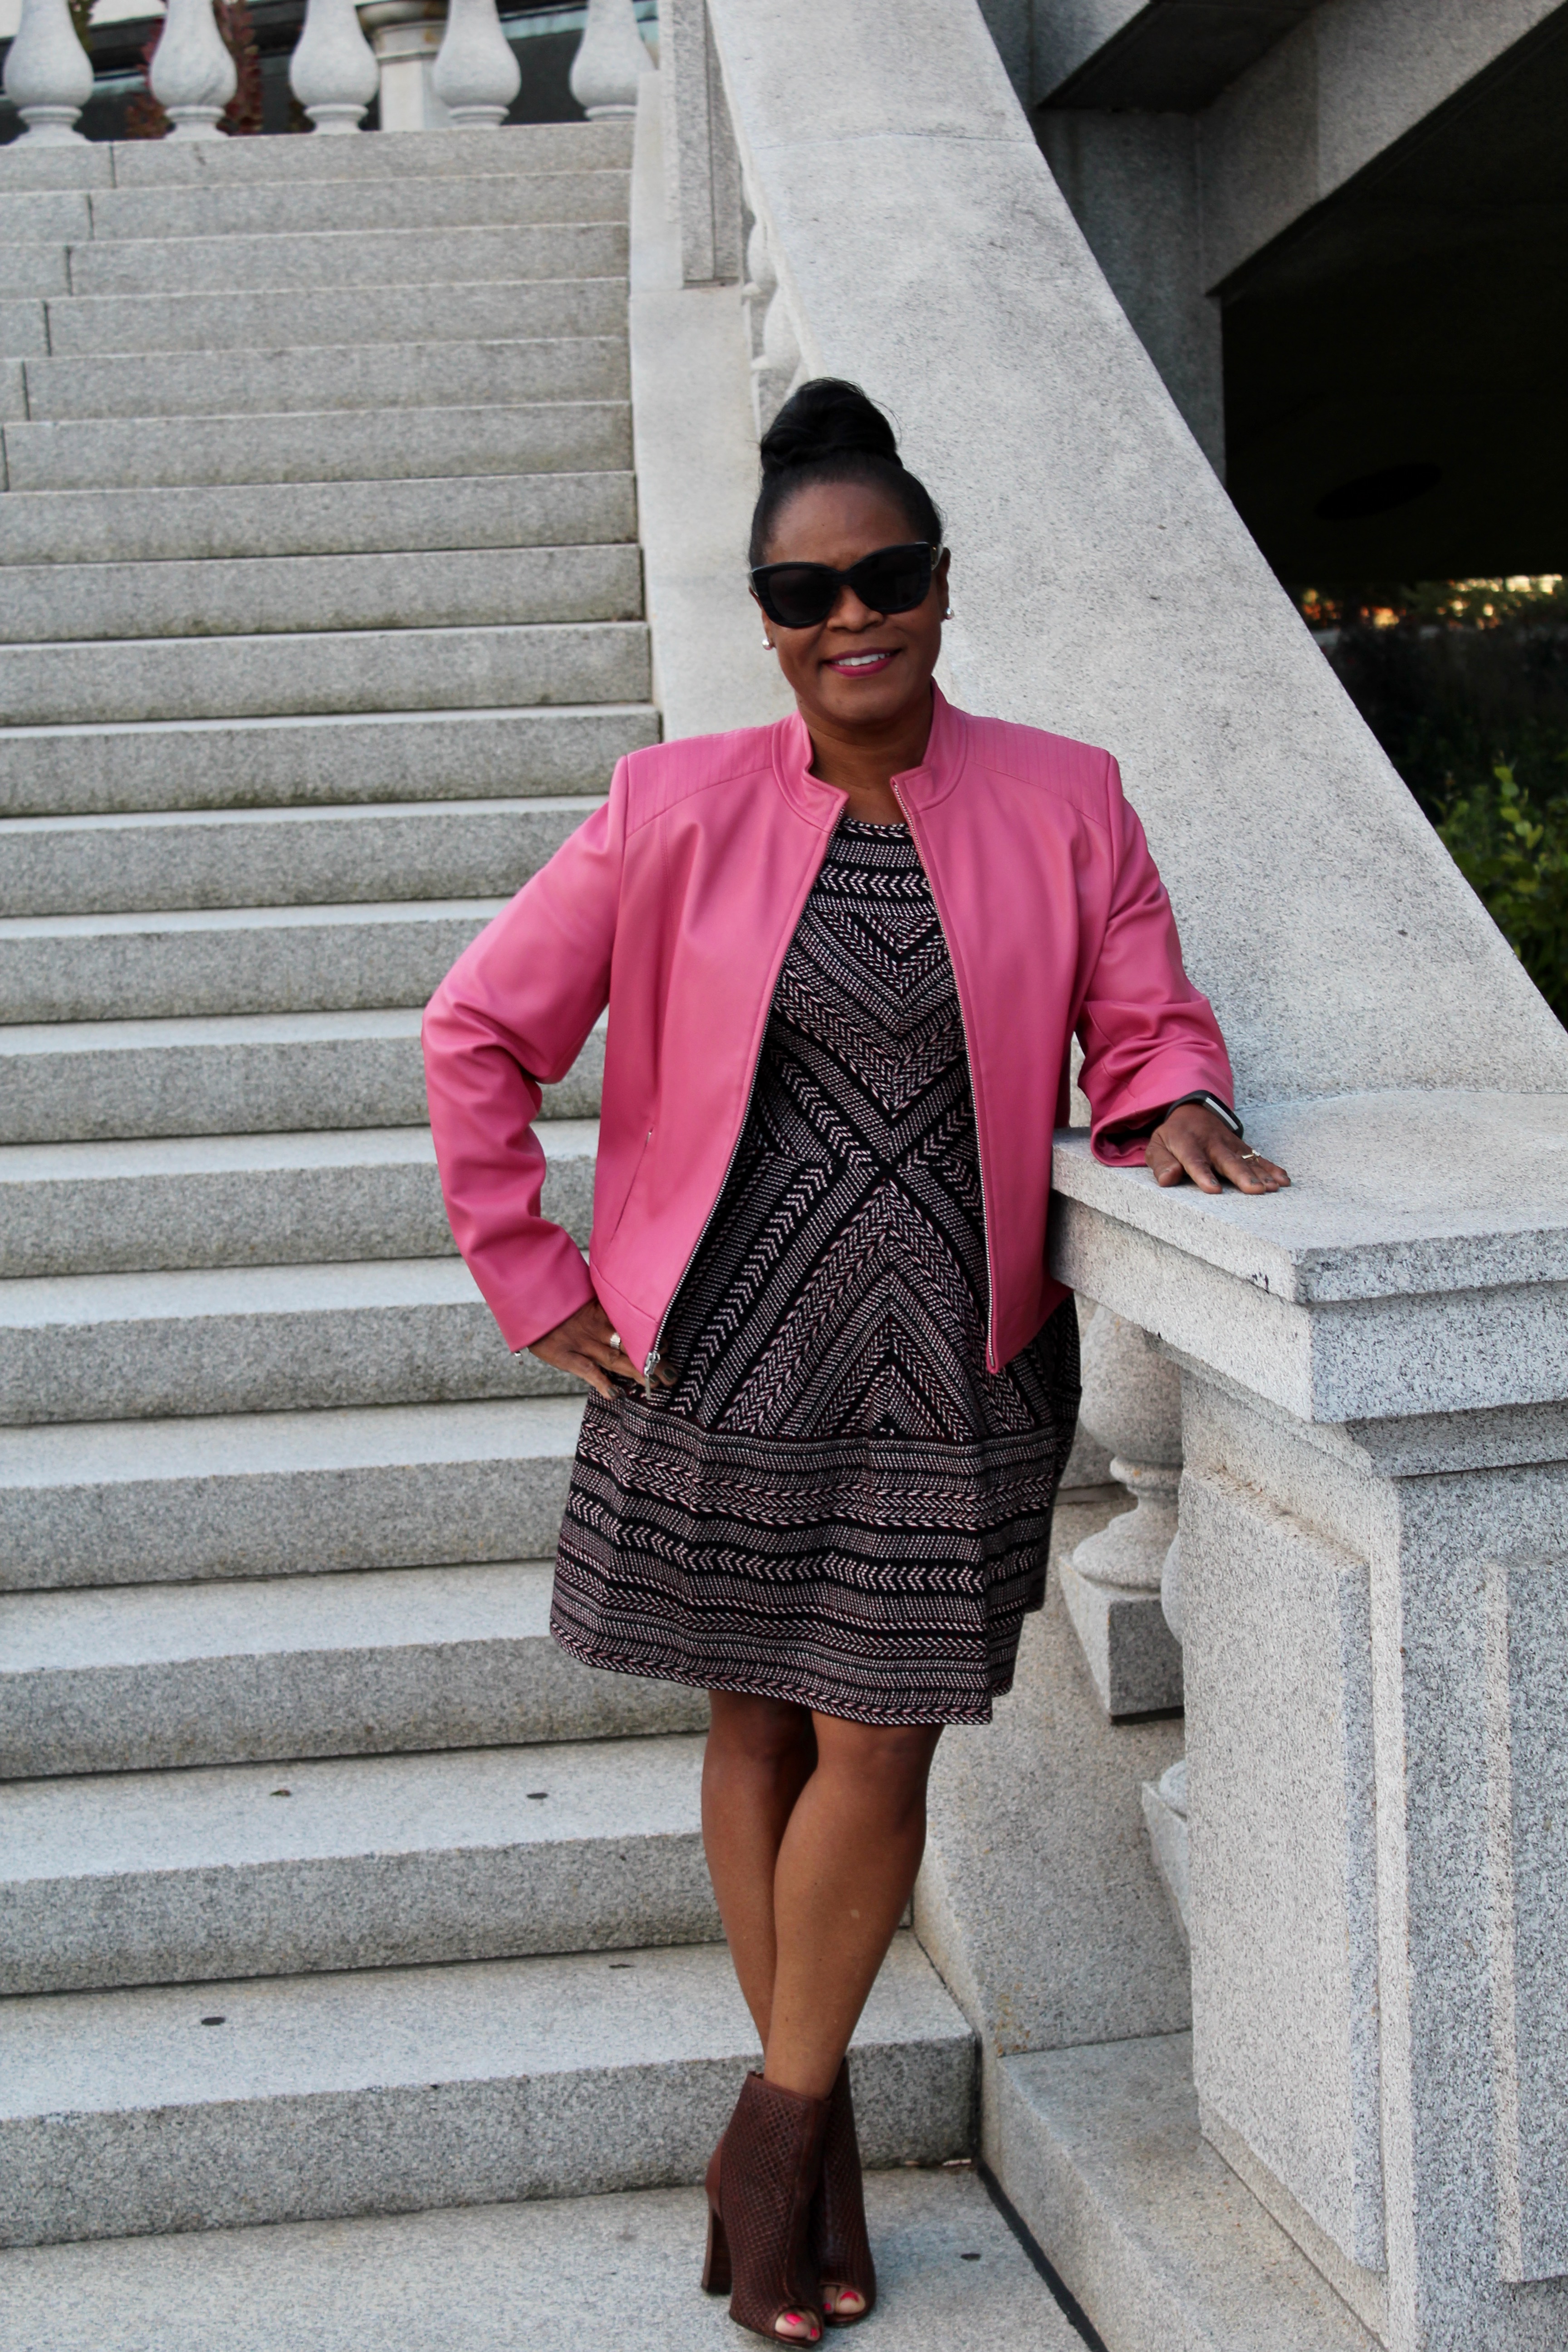 Location: At the Harrisburg State Capital Annex. Wearing old Valerie Stevens Pink Leather jacket, BCBGMaxAzria "Cassandra" dress, 